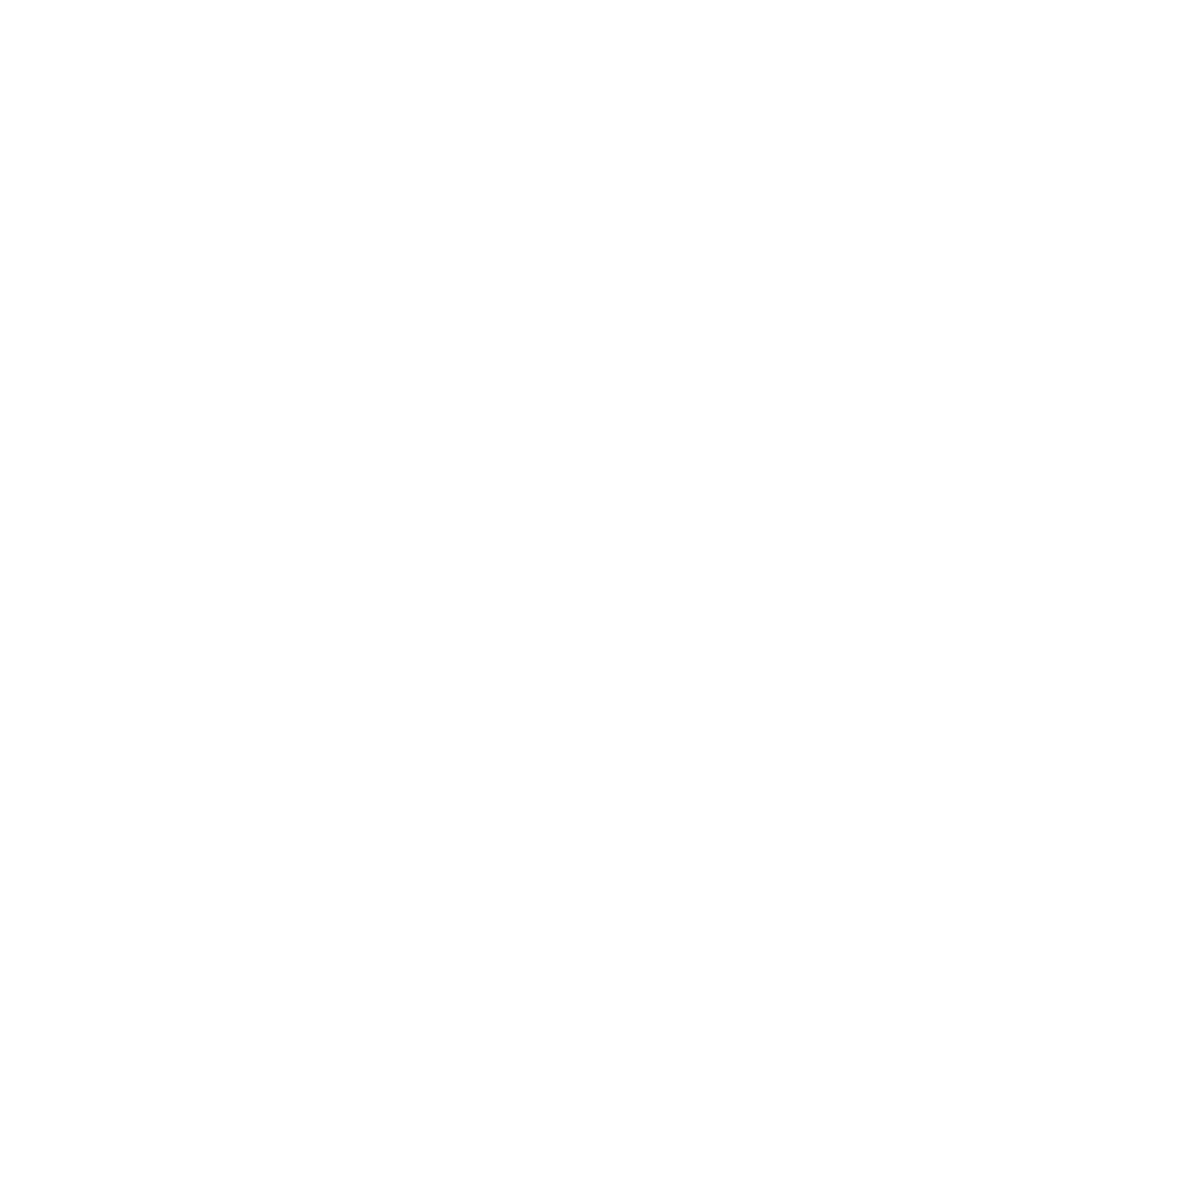 HEVC/VVC Encoding